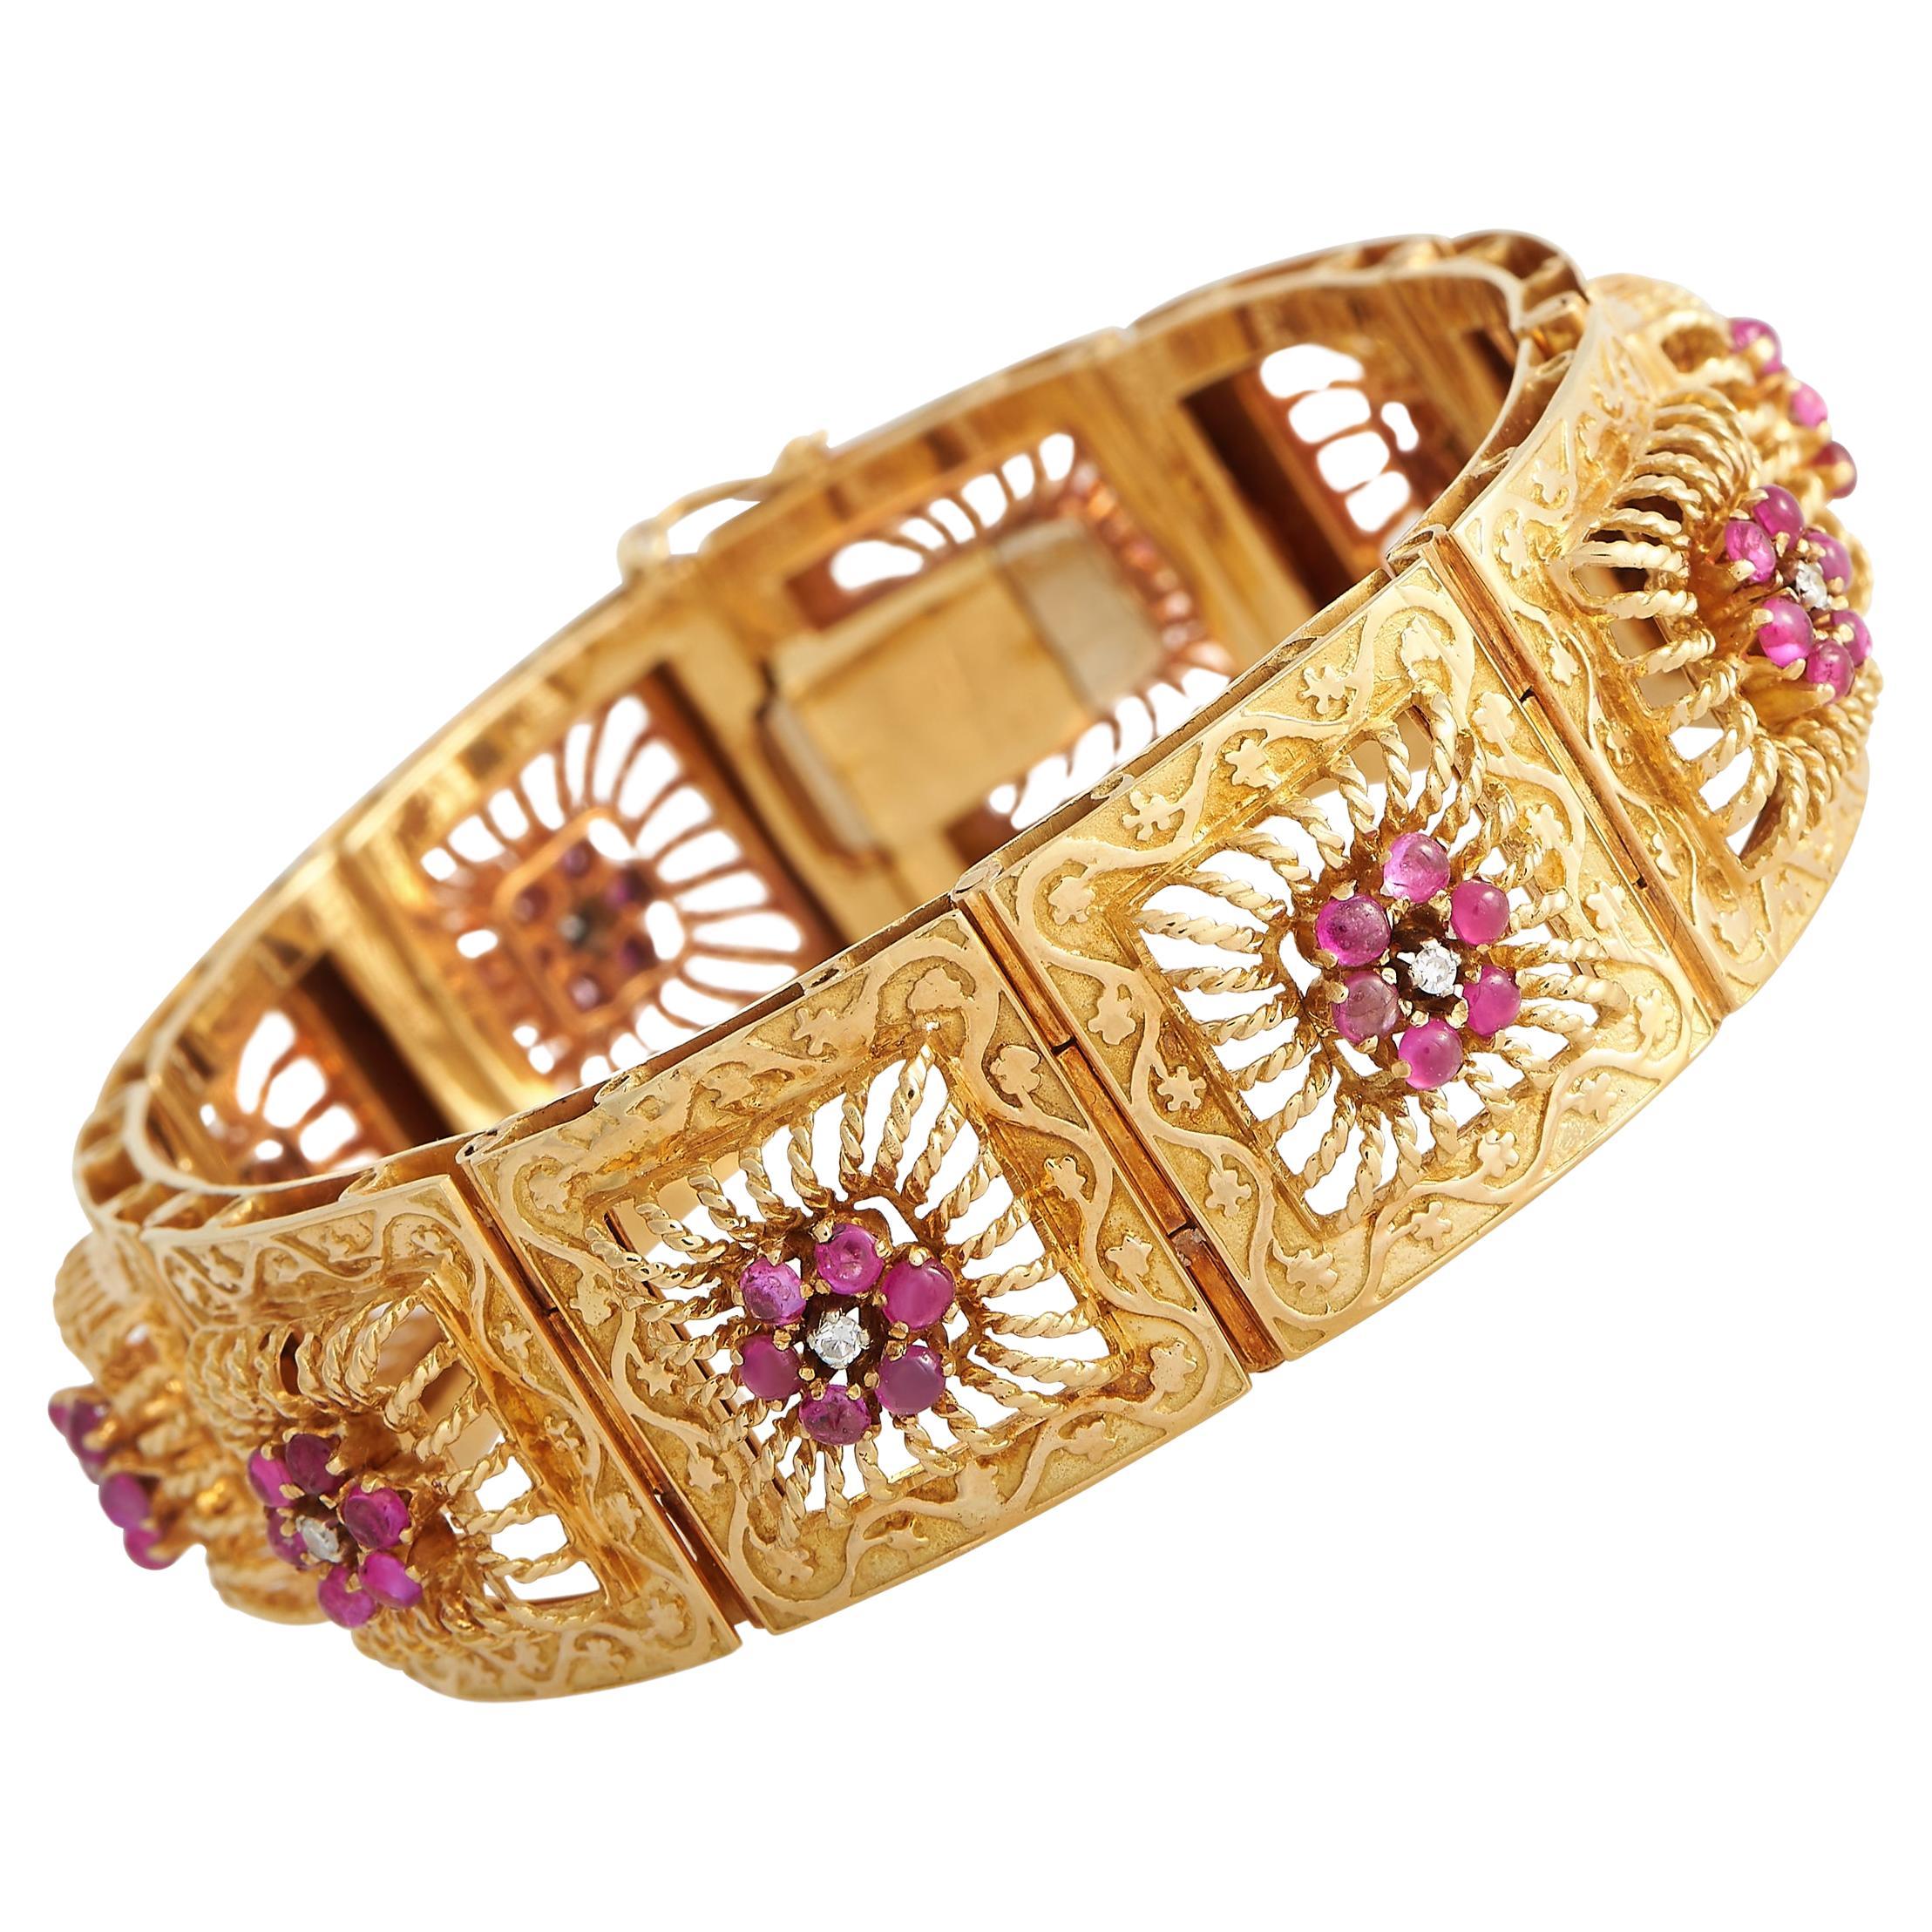 18K Yellow Gold Diamond and Ruby Art Nouveau Bracelet